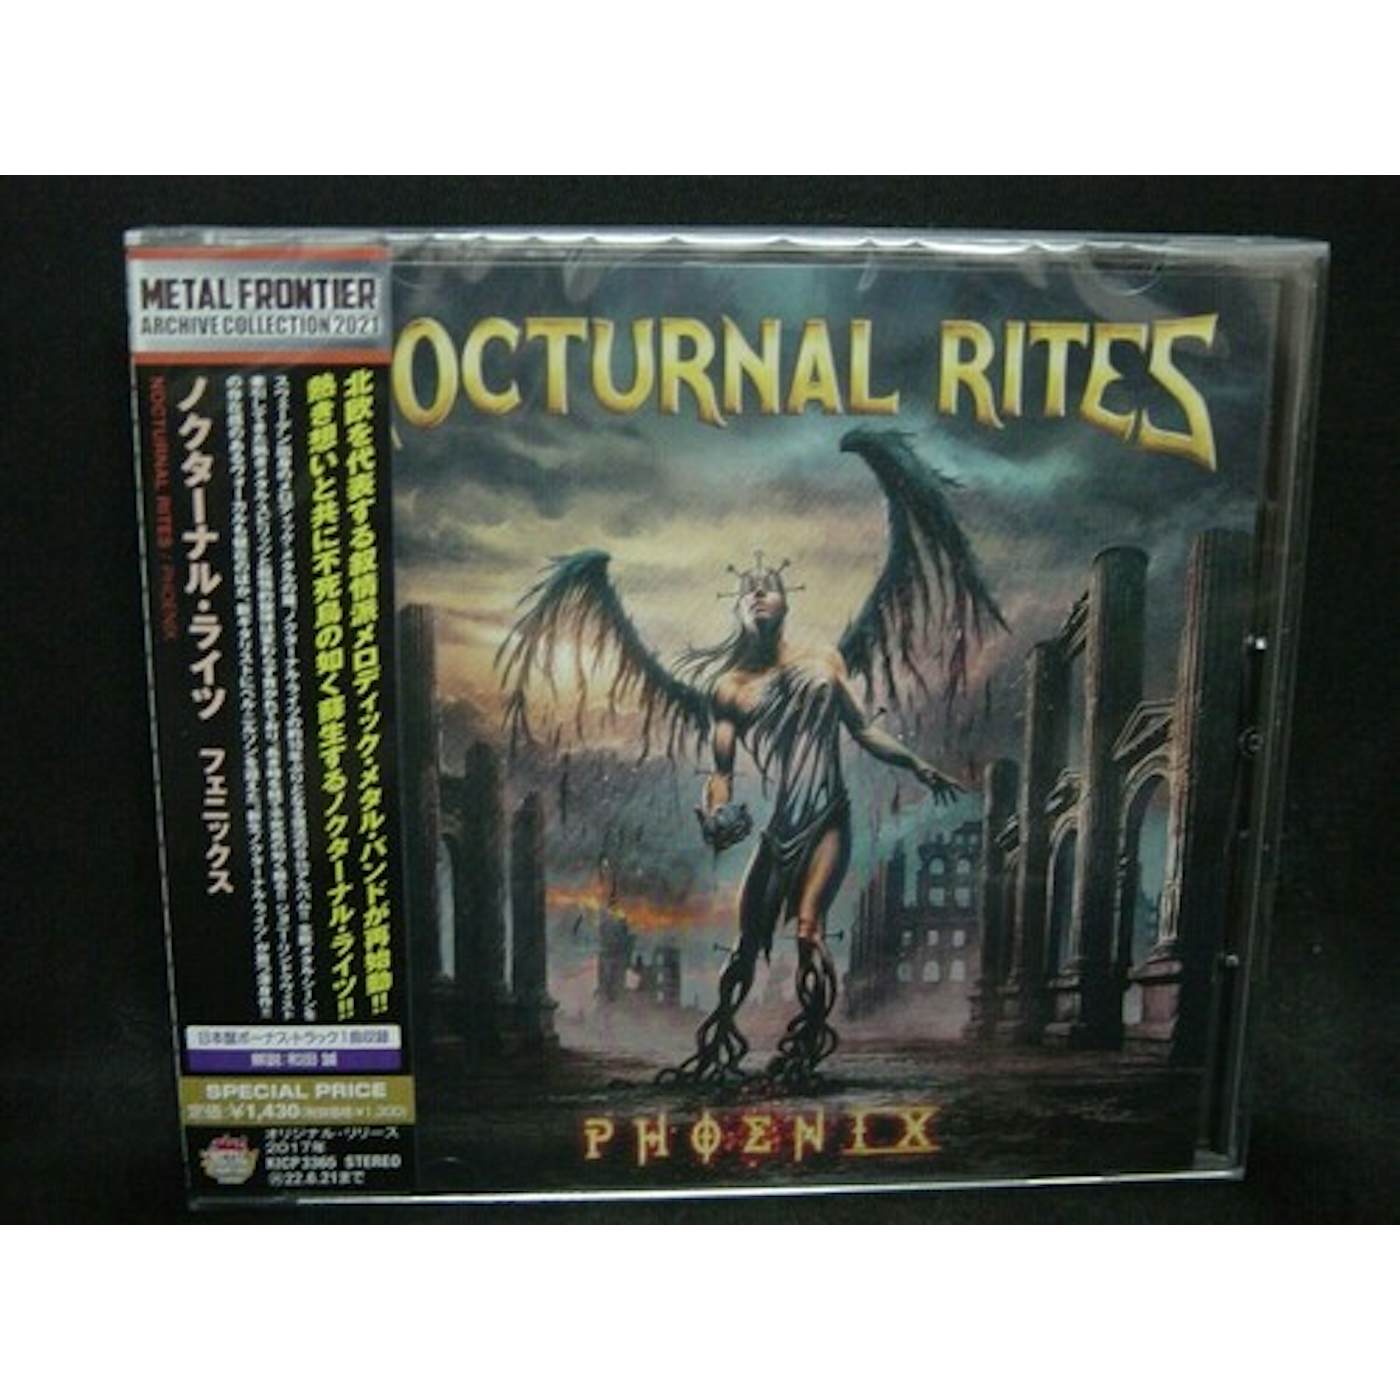 Nocturnal Rites PHOENIX CD